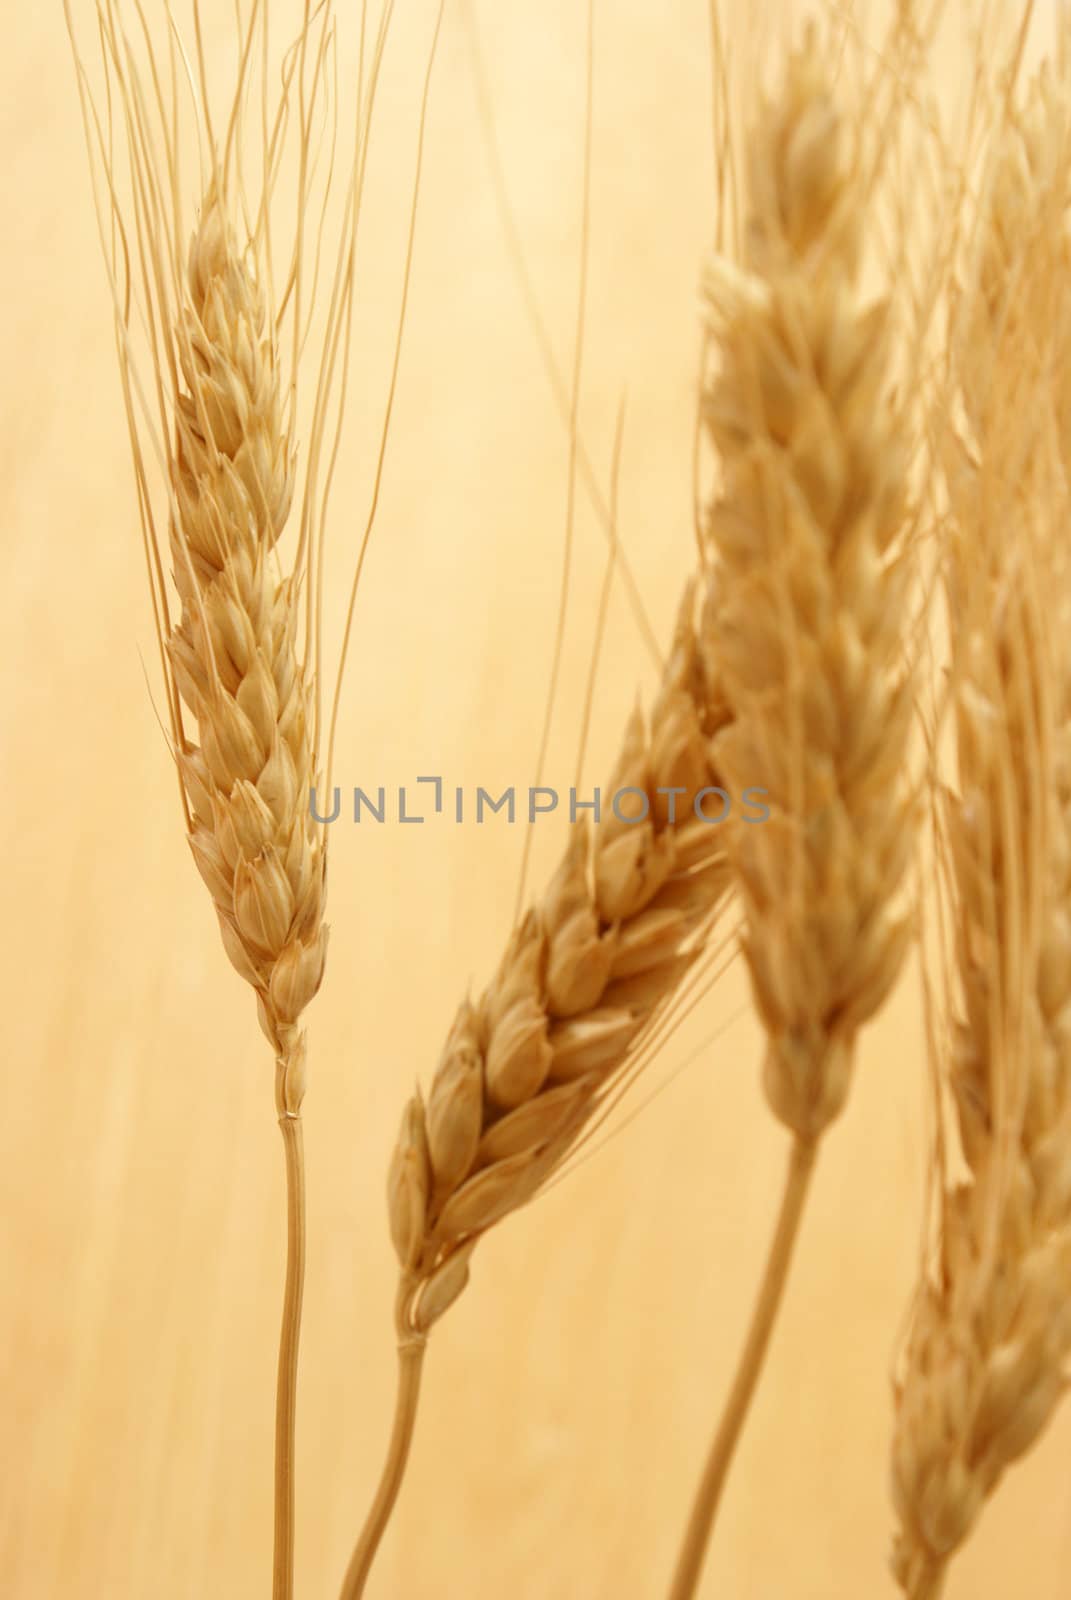 A closeup shot of some bearded wheat.